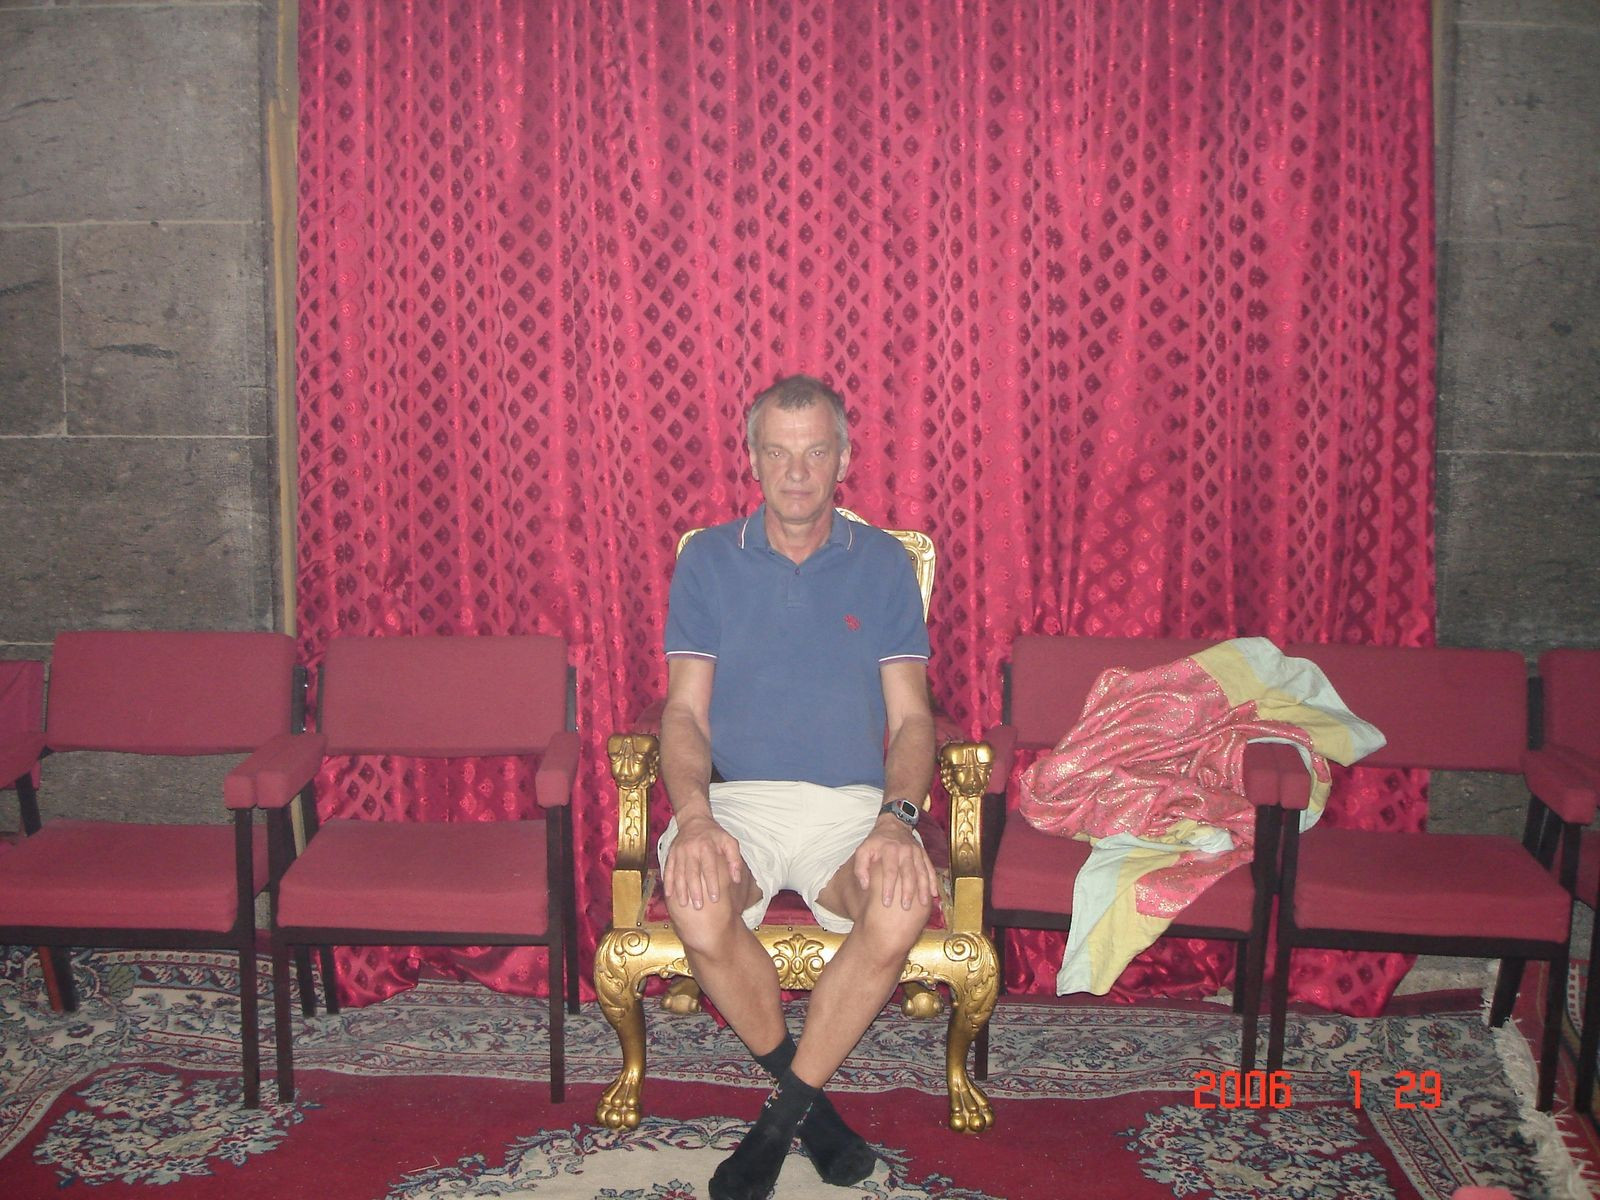 Sitting on the Etiopian emperor's chair in Addis Abeba Ethiopia